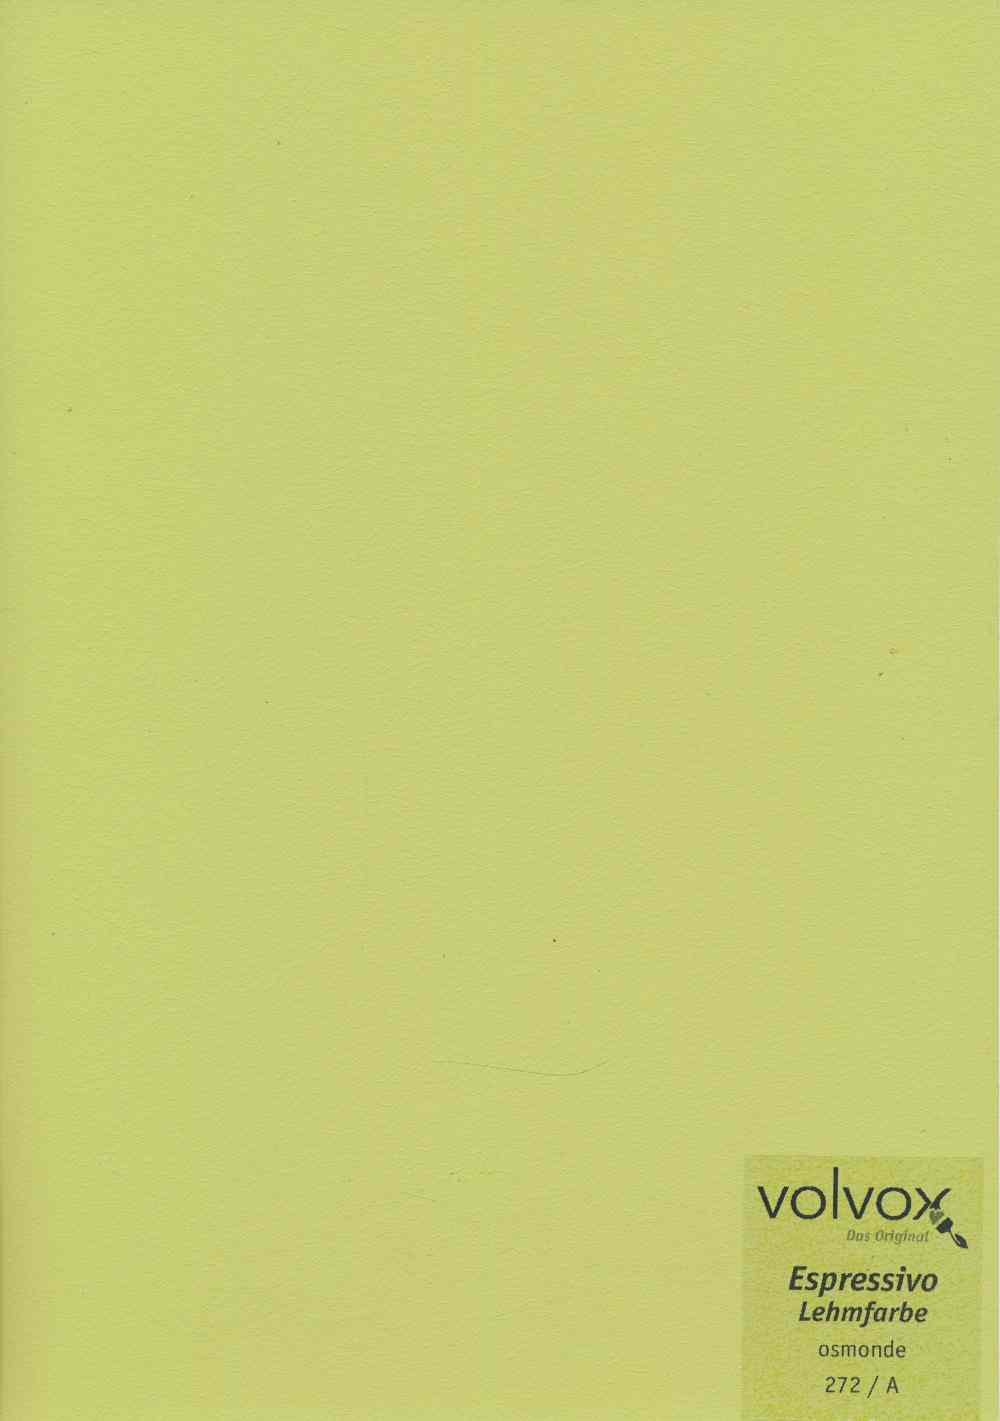 Volvox Espressivo Lehmfarbe 272 osmonde